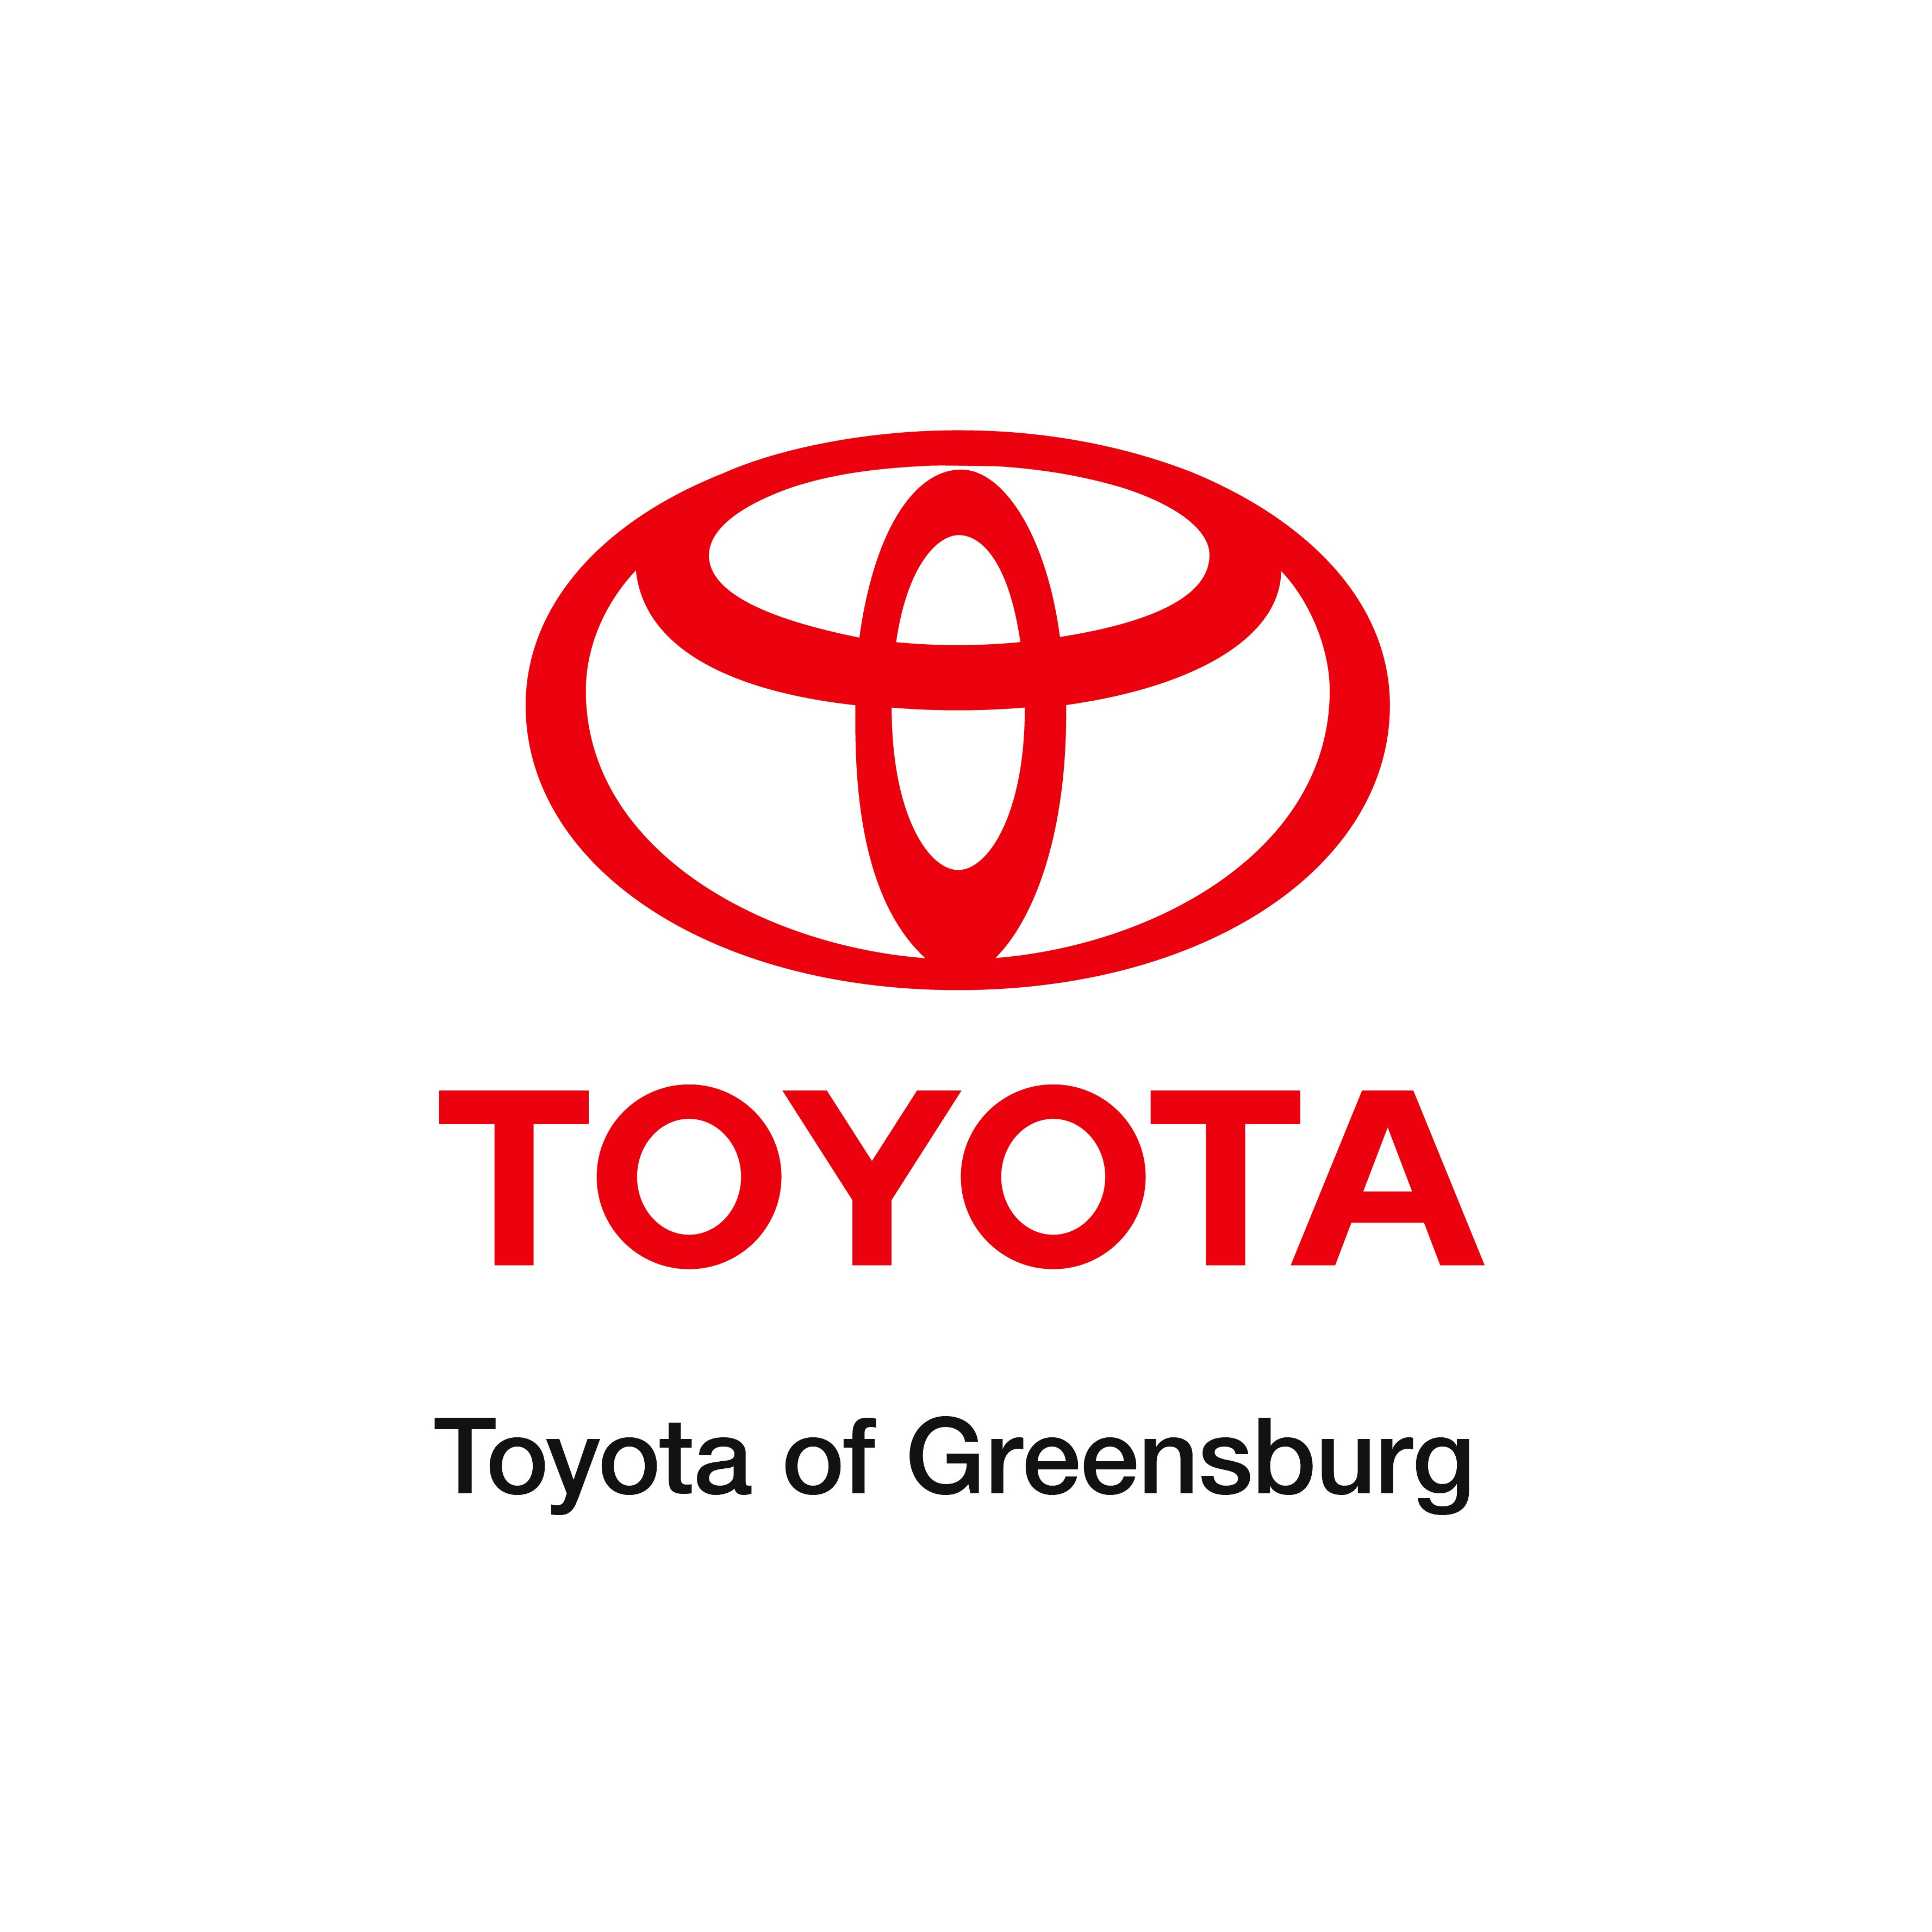 001.2 Toyota of Greensburg